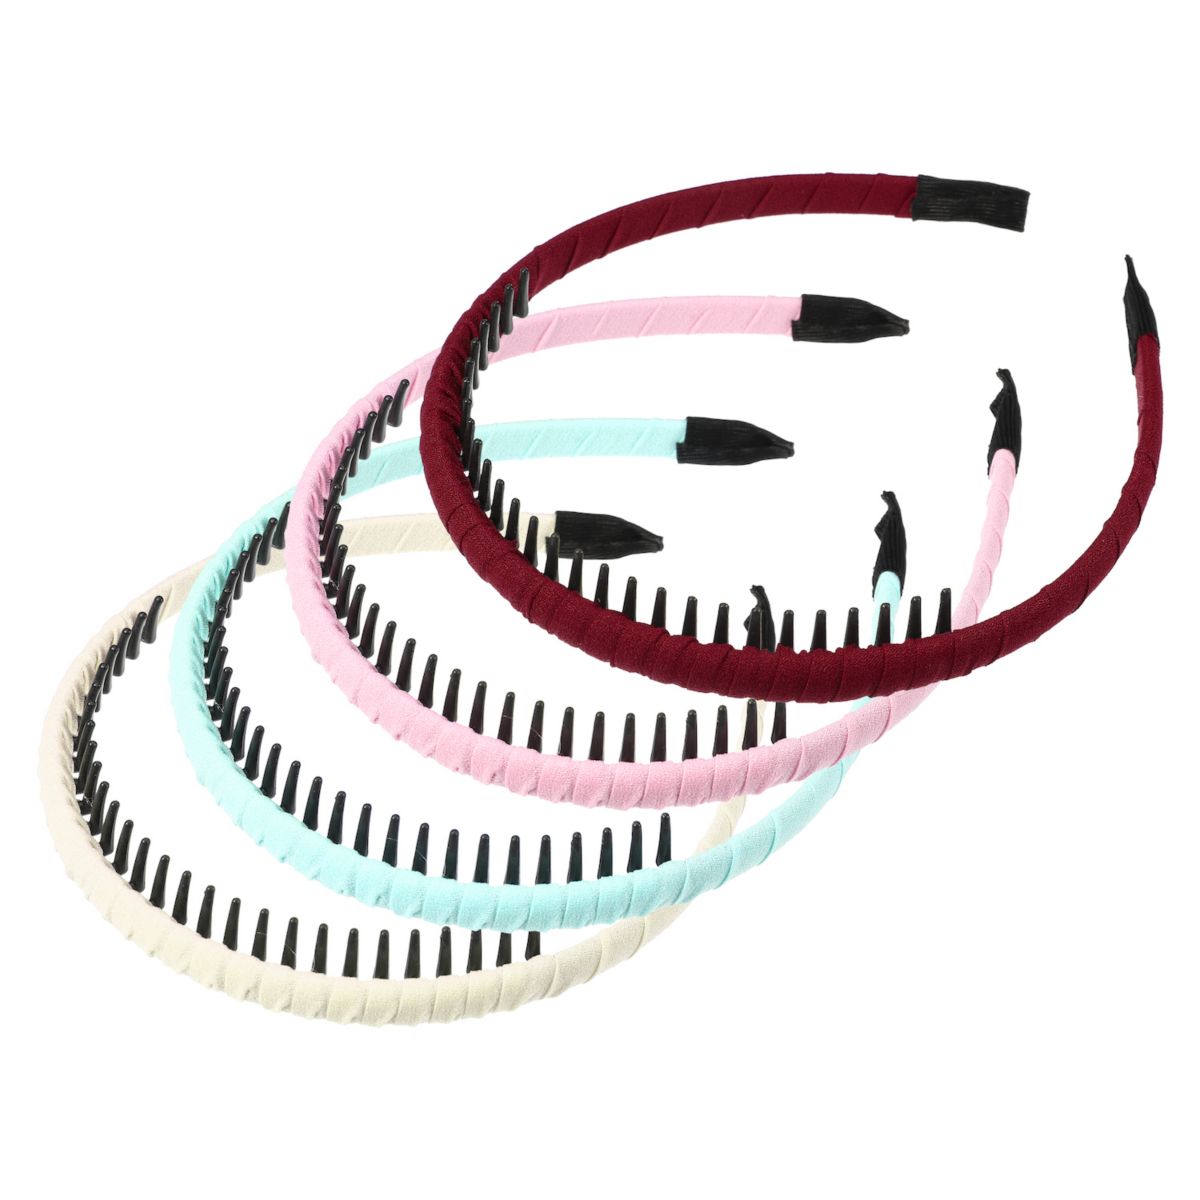 4pcs Women Teeth Comb Headbands Non-slip Hair Hoop Wine Red Beige Pink Blue Unique Bargains